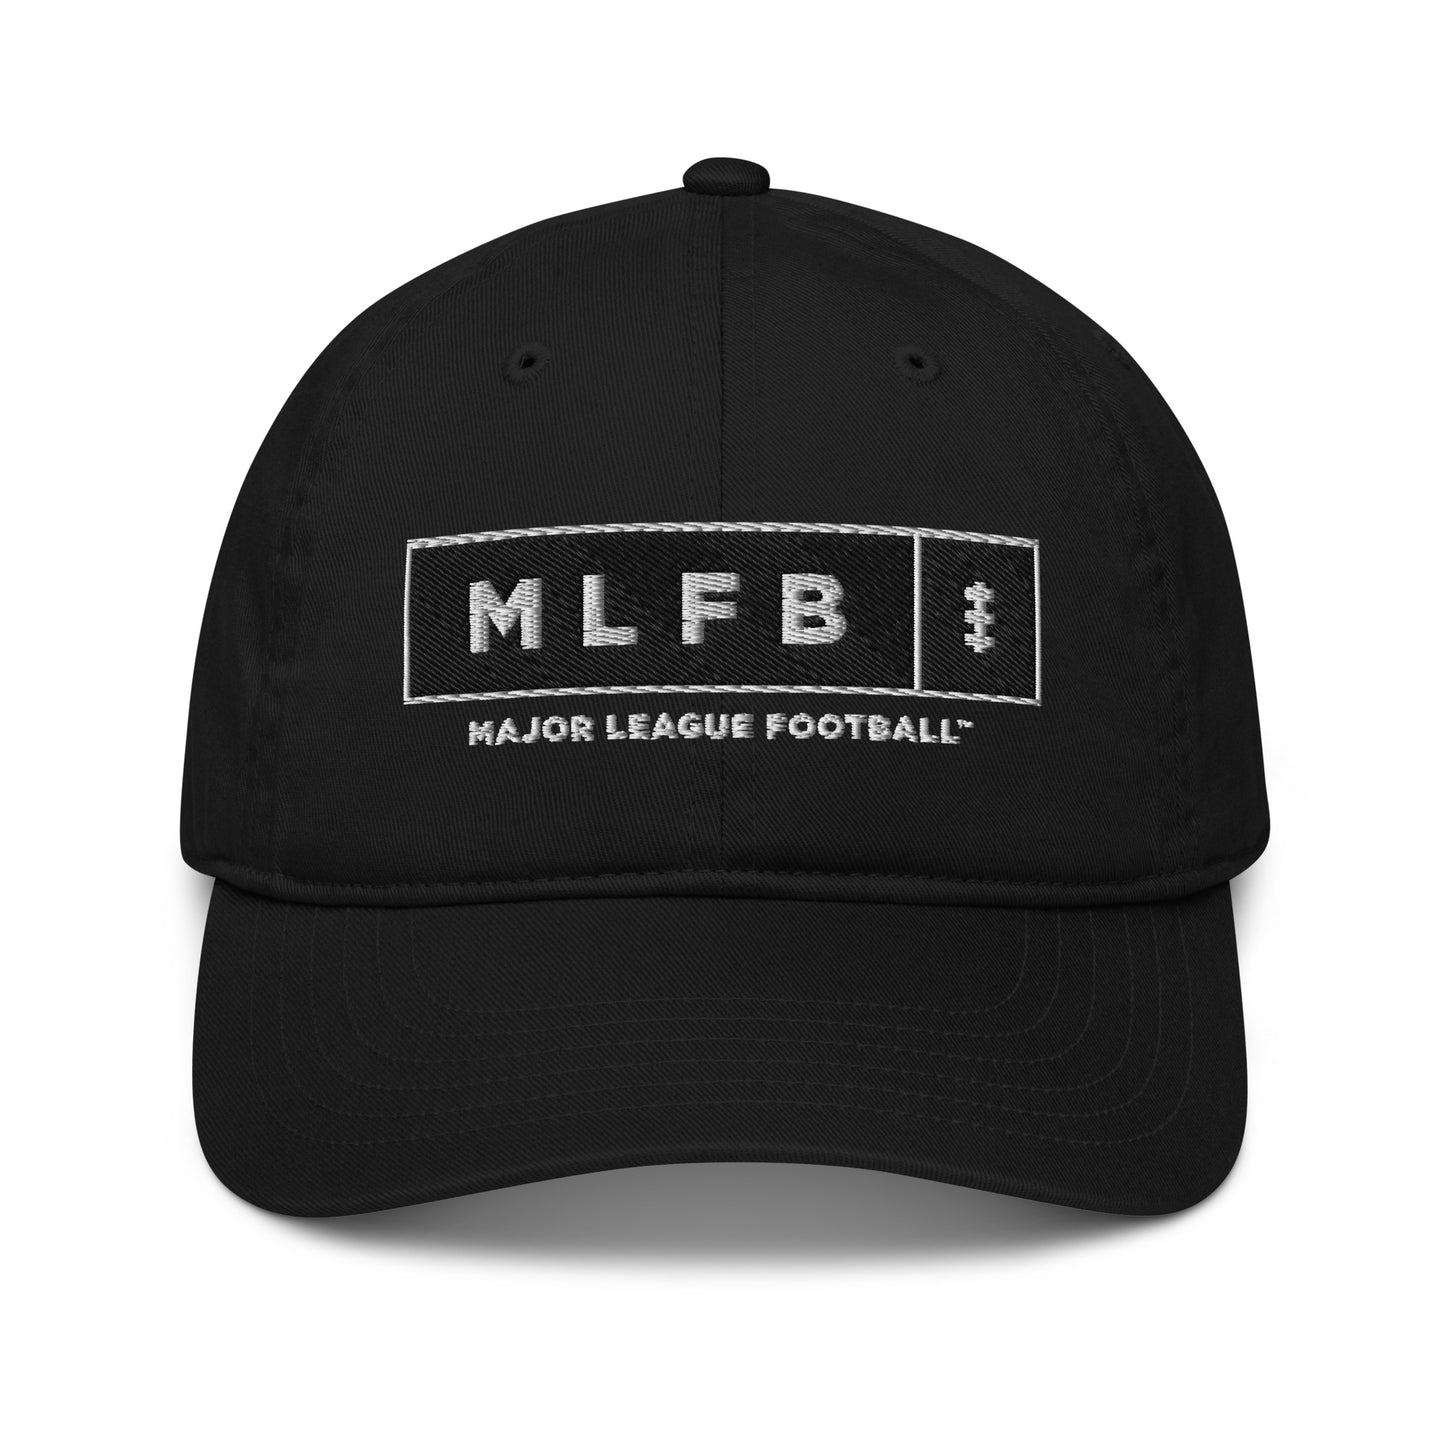 Black MLFB Hat